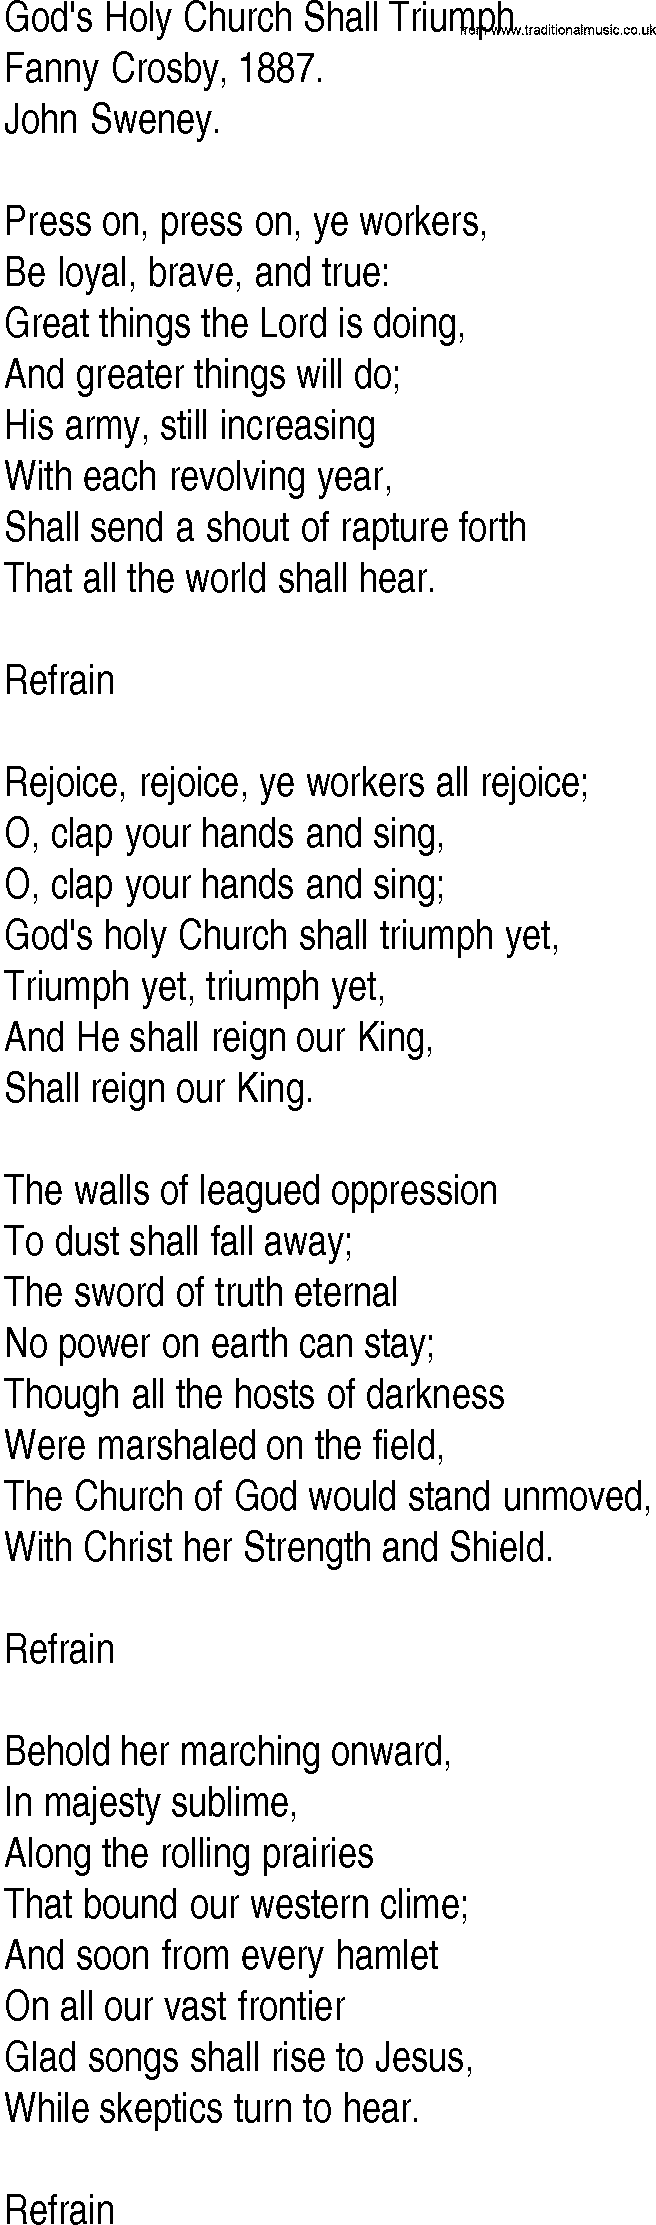 Hymn and Gospel Song: God's Holy Church Shall Triumph by Fanny Crosby lyrics